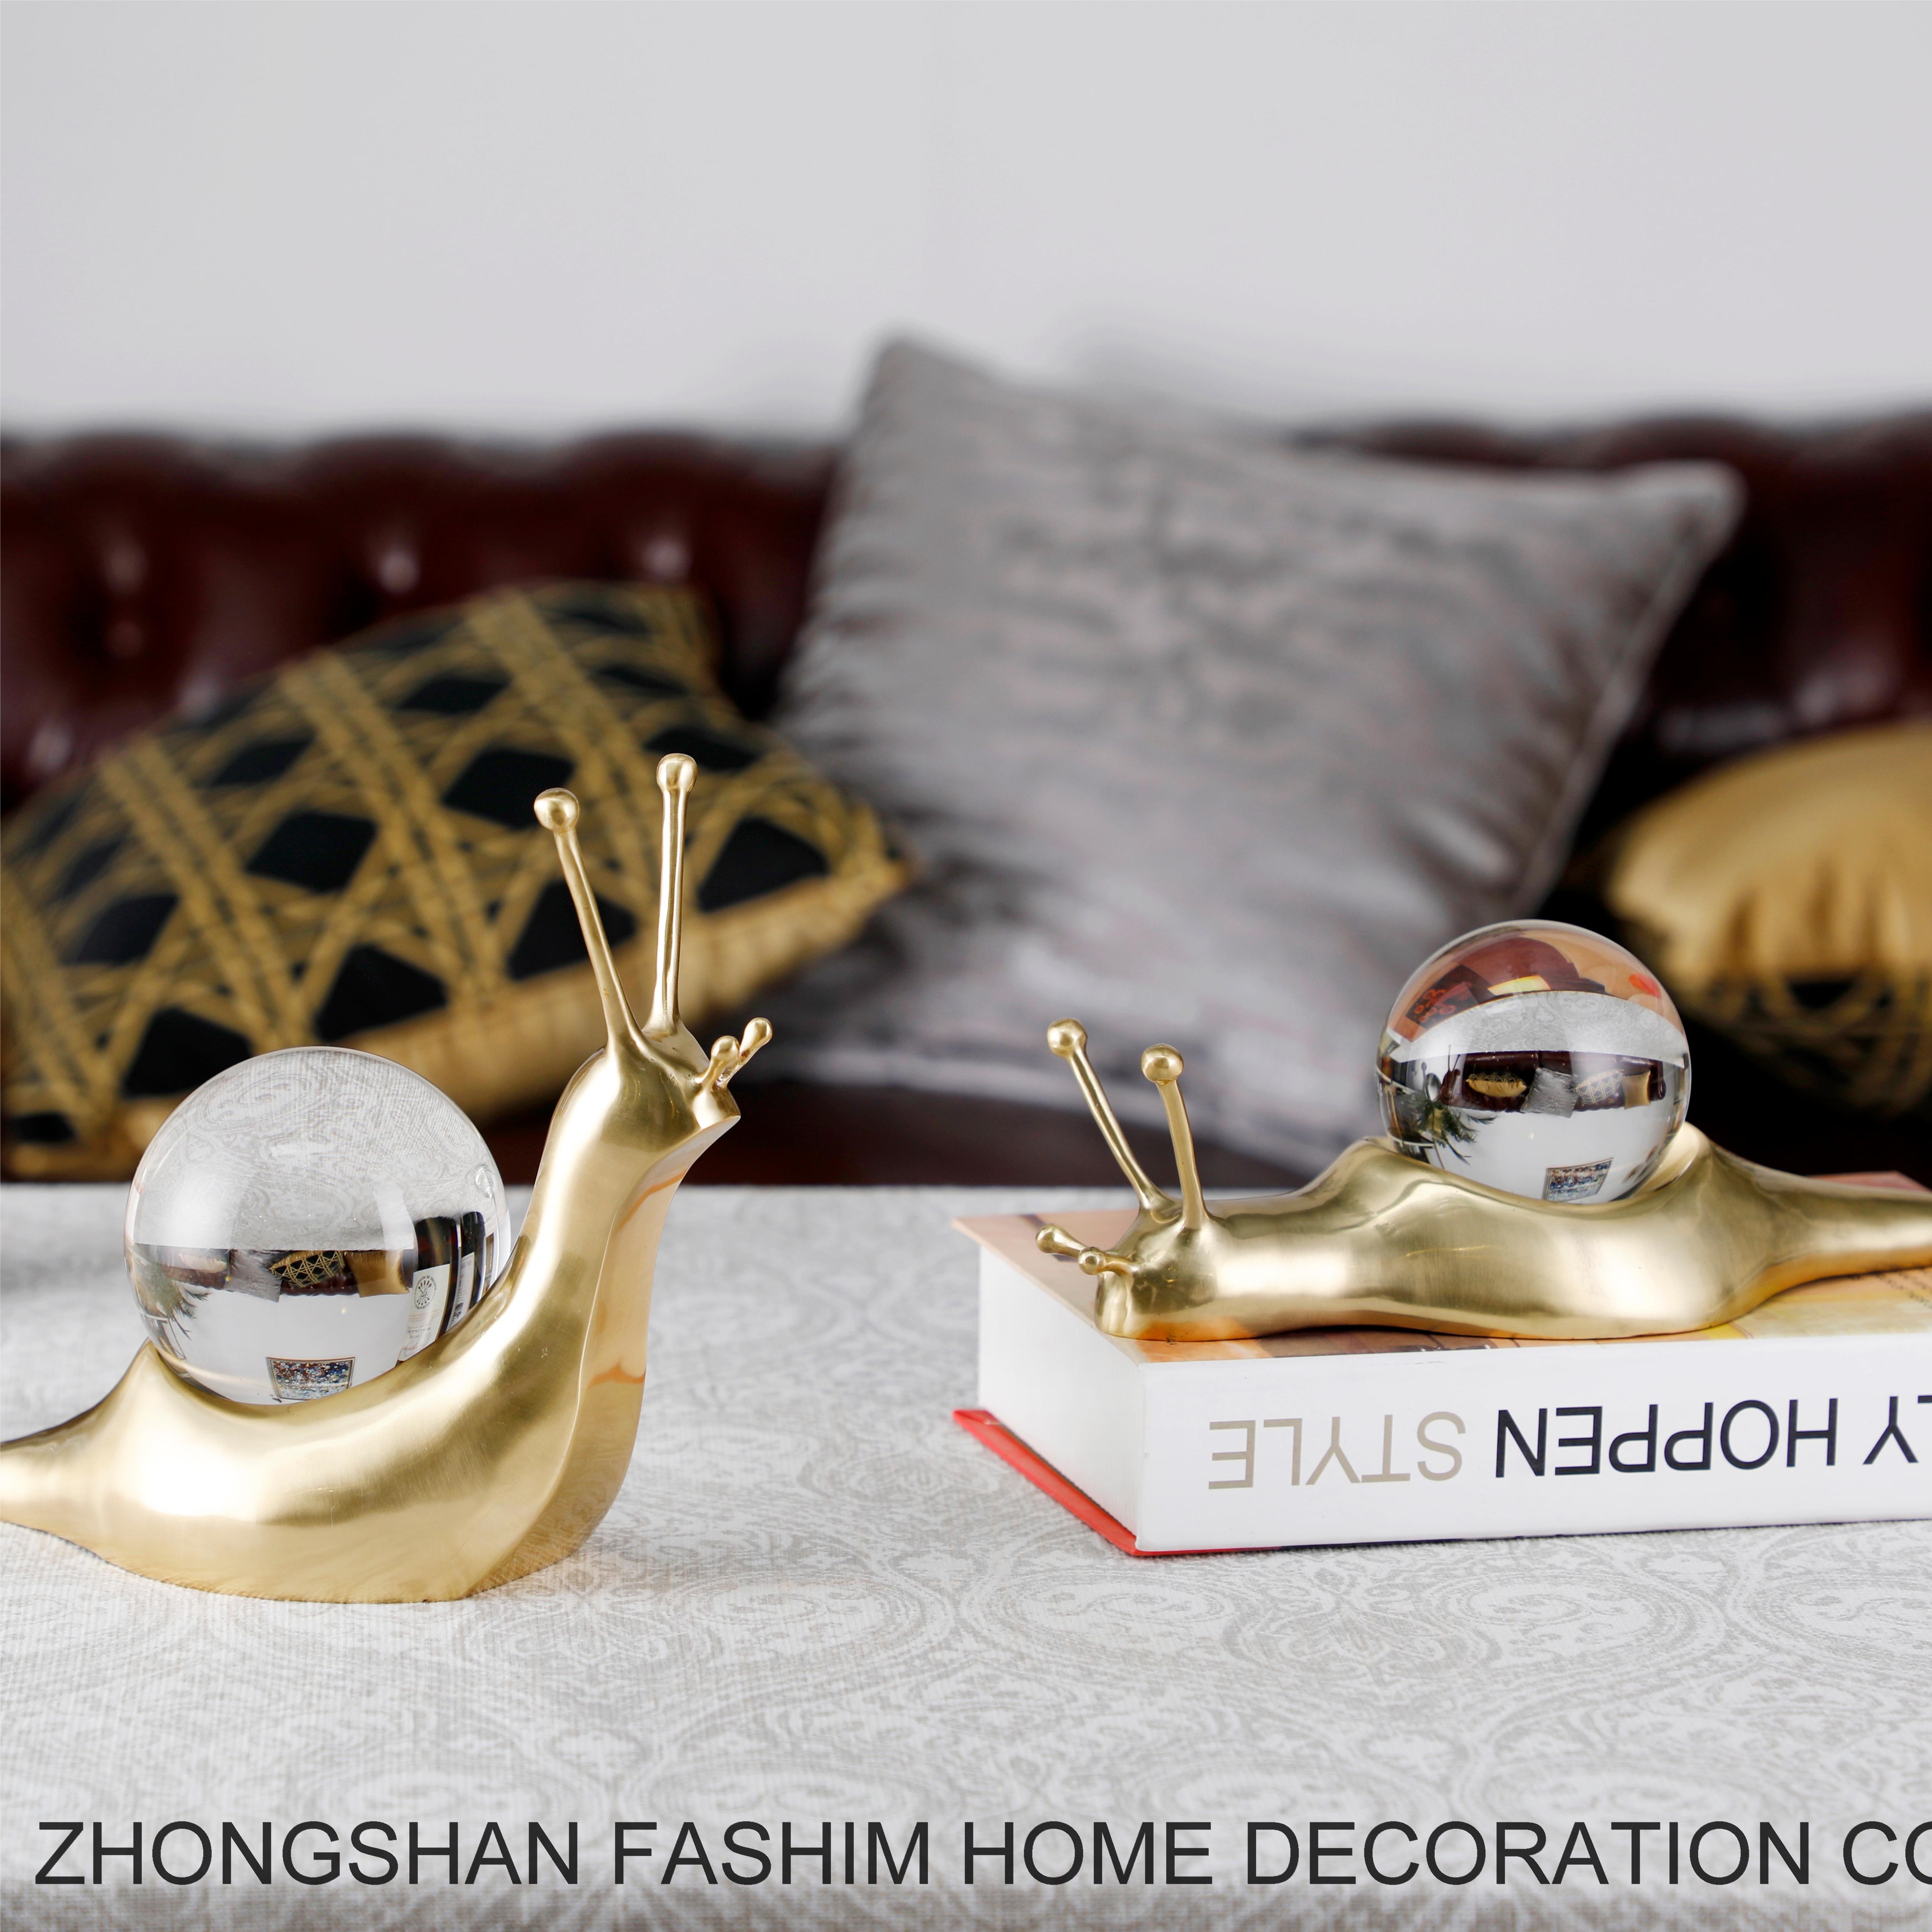 Fashimdecor modern home decoration crystal sculpture ornaments